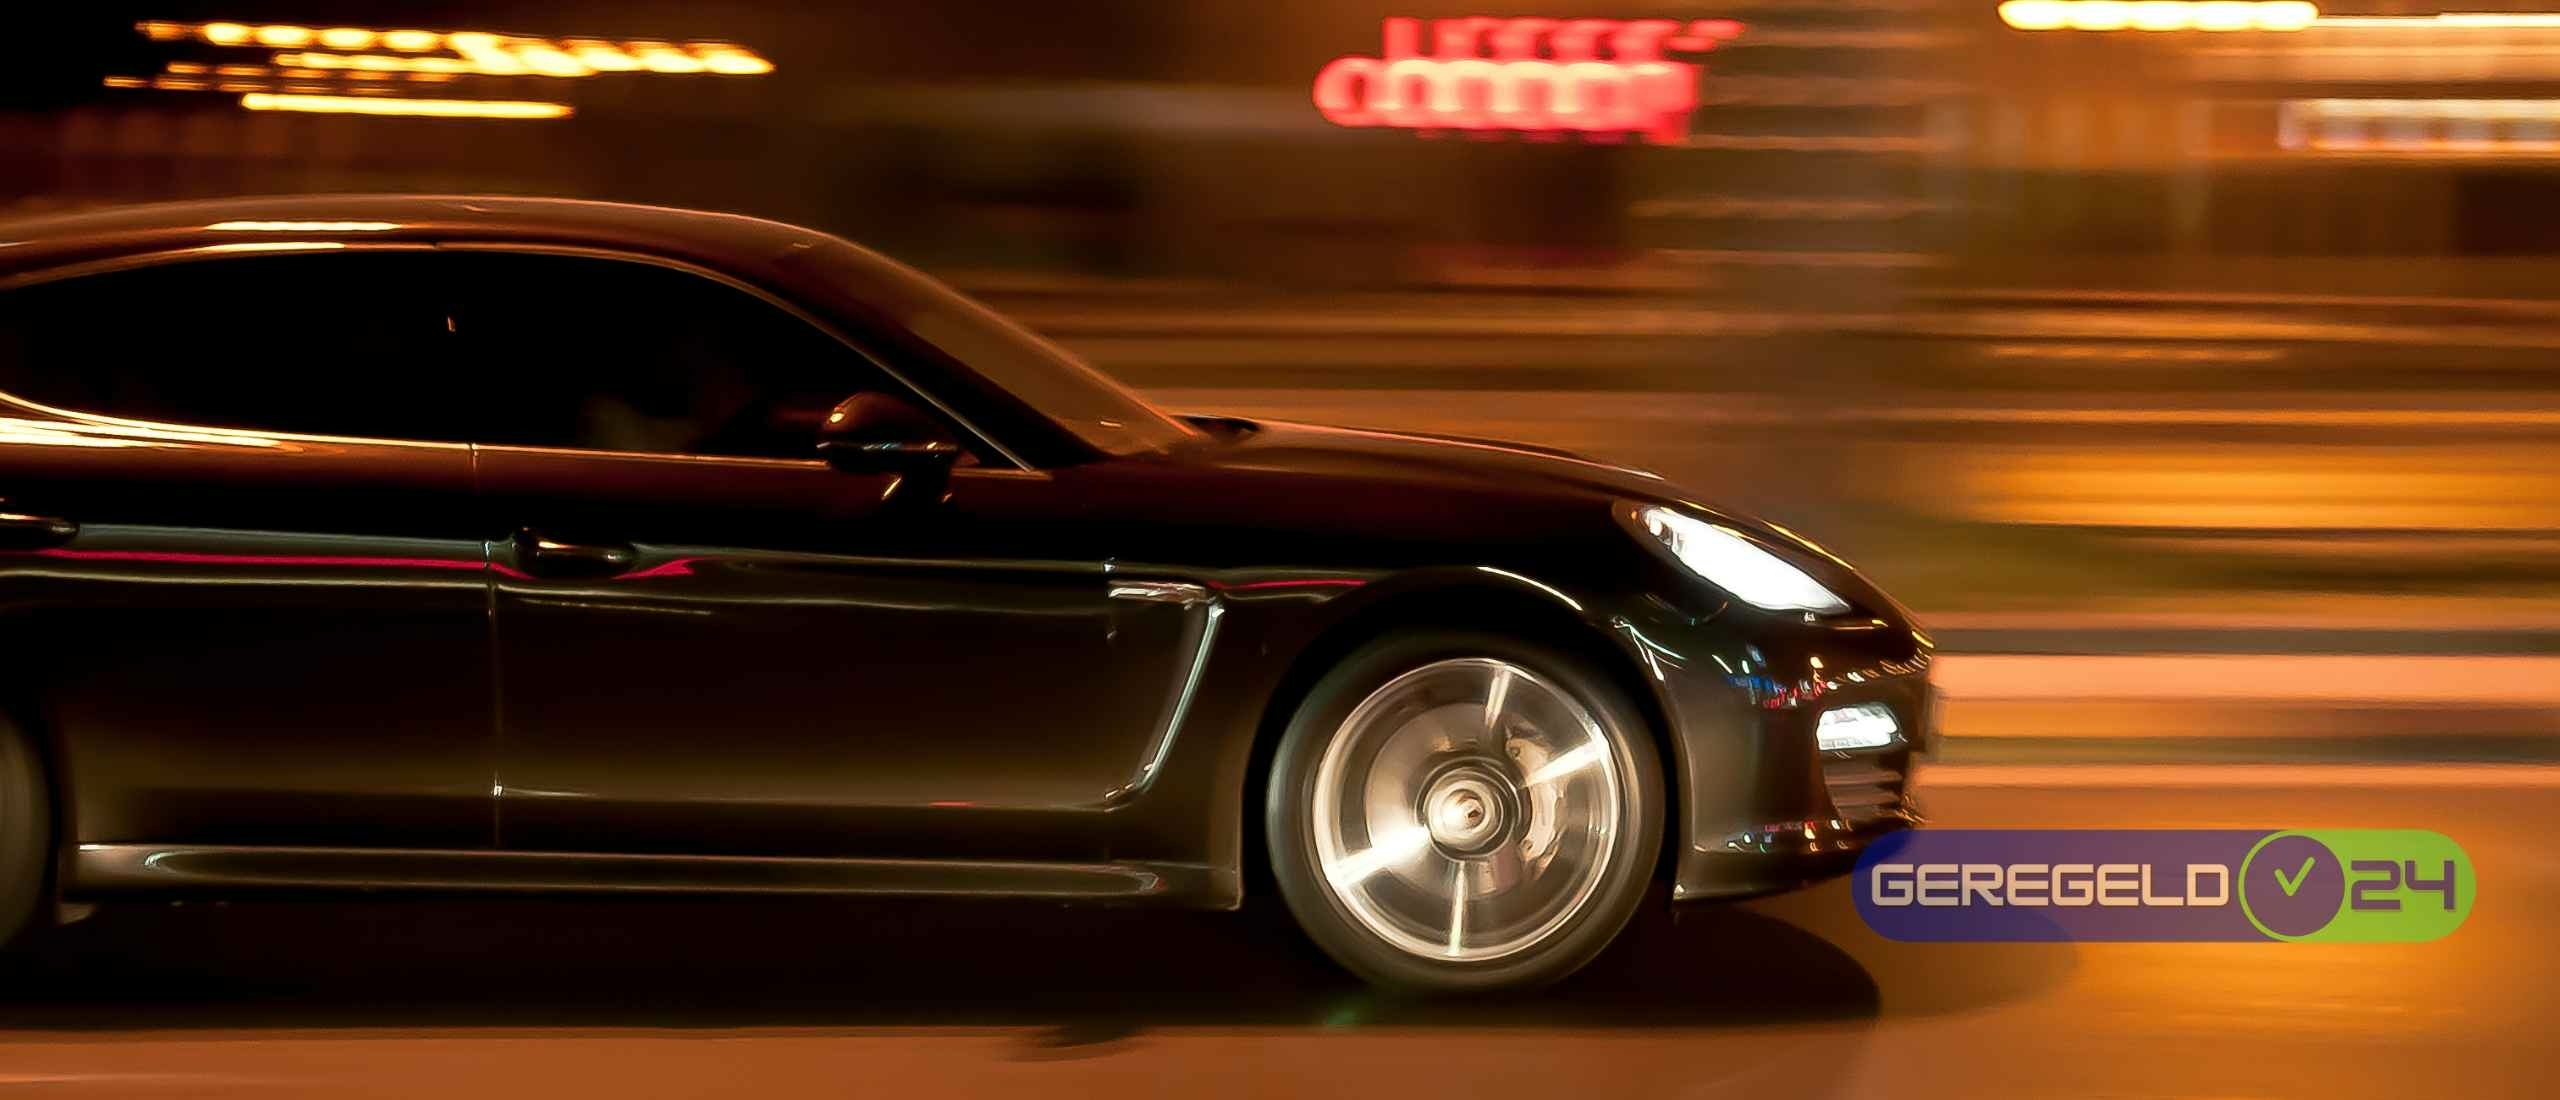 Krachtige elegantie: De Porsche Cayenne - de ultieme SUV-ervaring